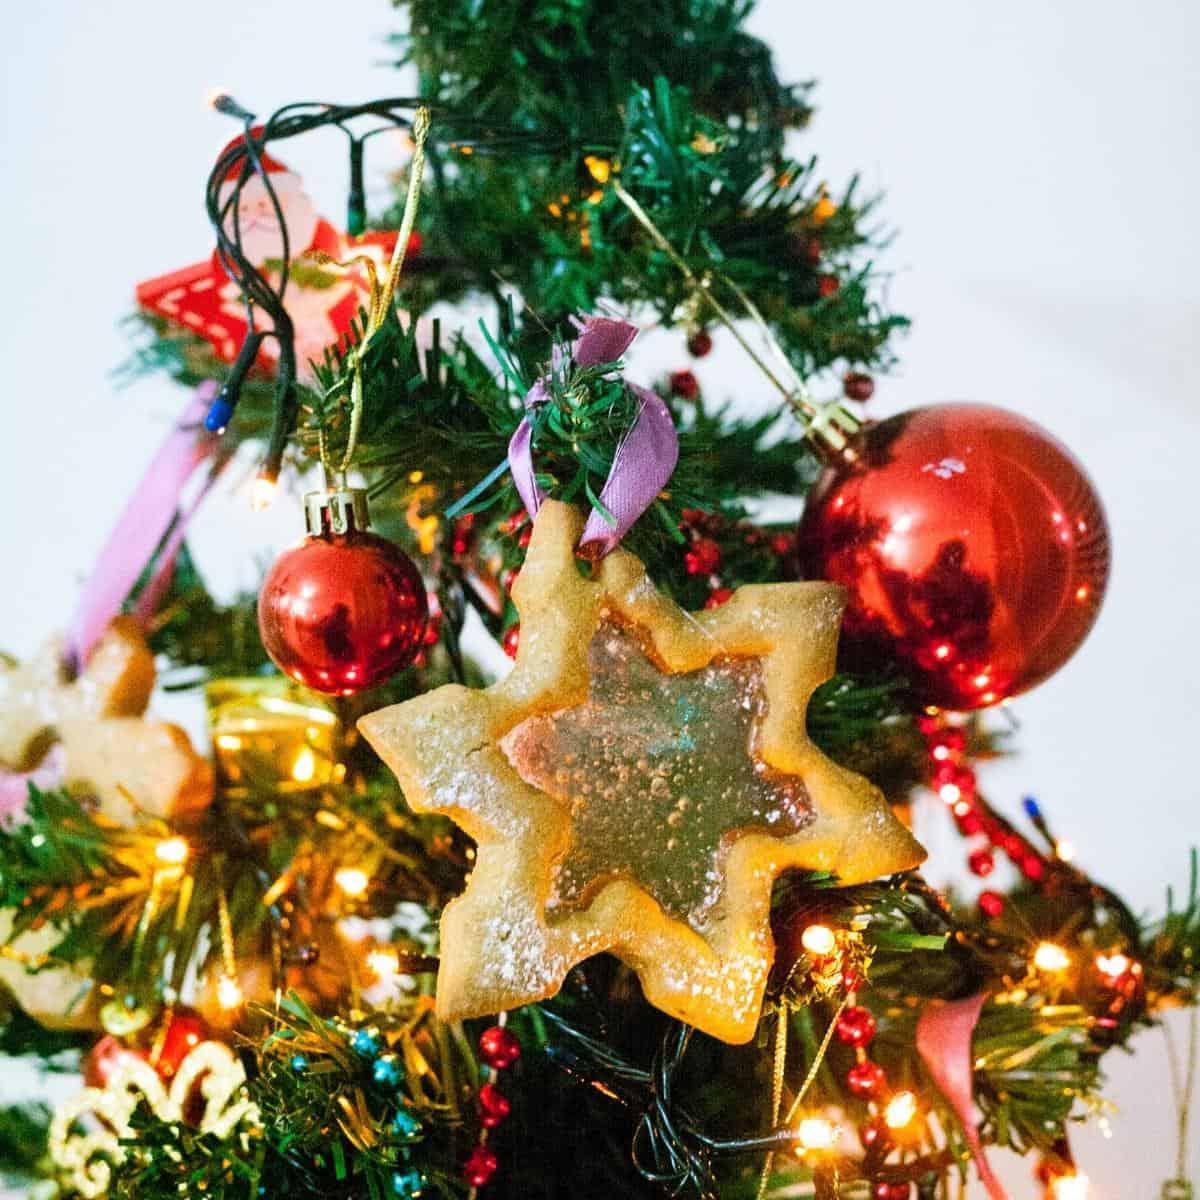 Snowflake ornament cookies on the Christmas tree.